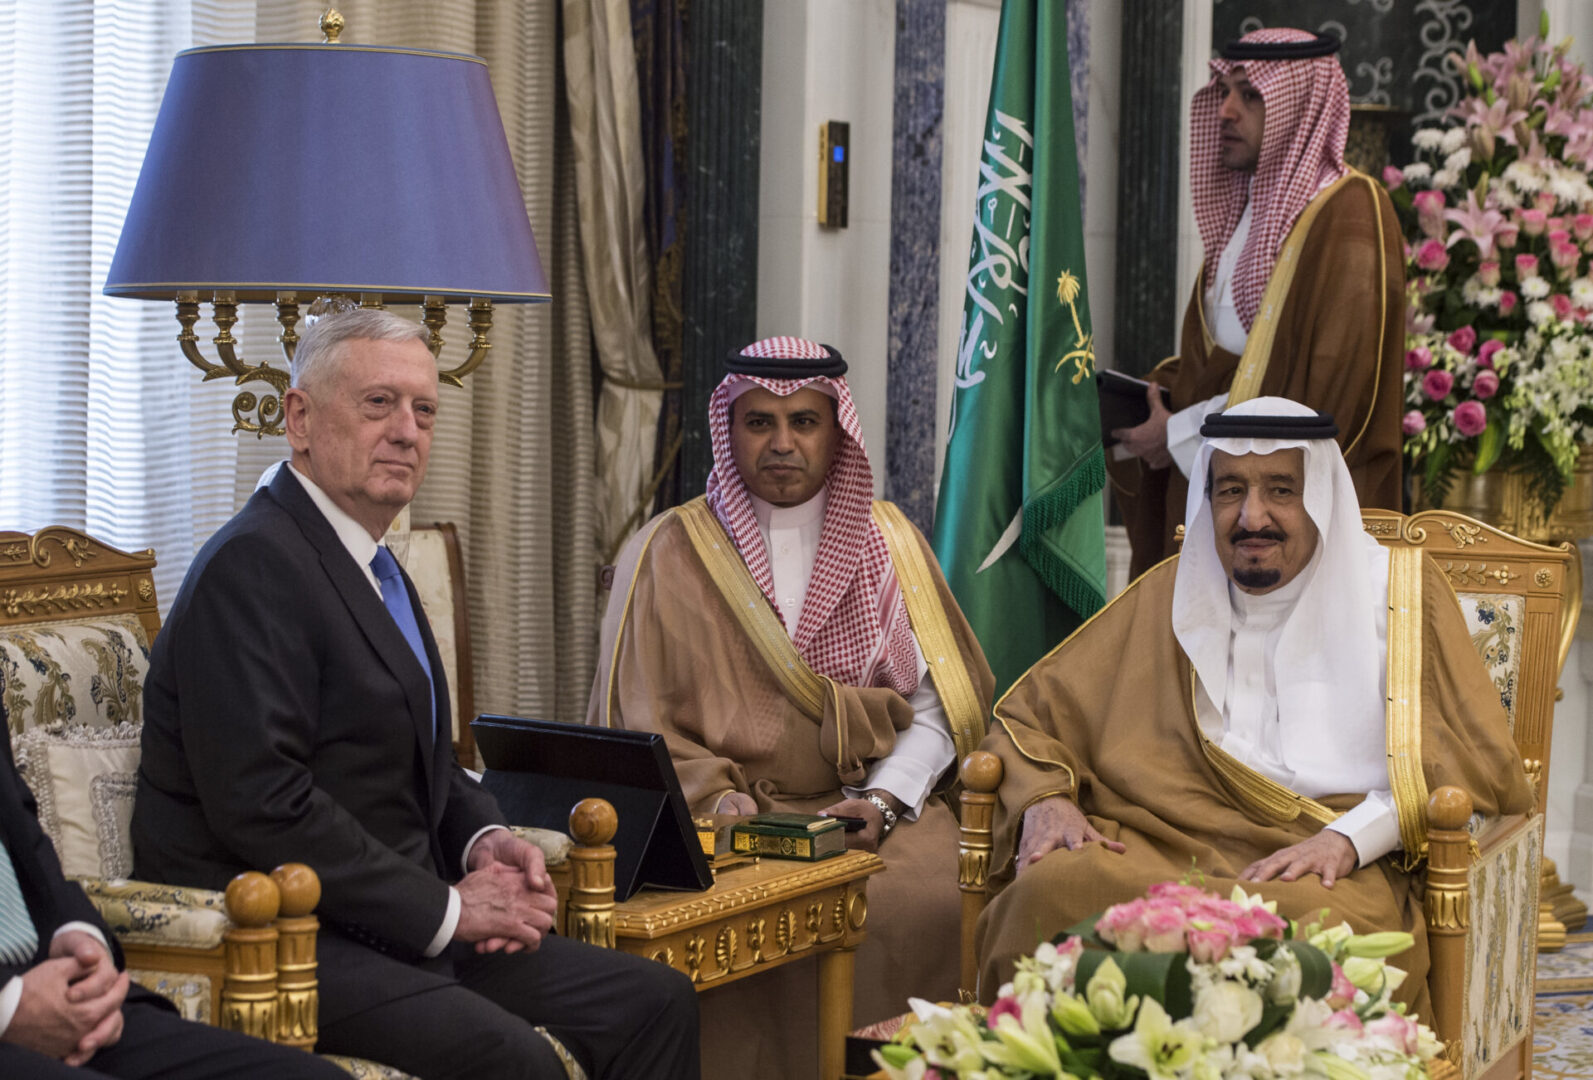 Secretary of Defense Jim Mattis meets with Saudi Arabia’s King Salman Bin Abdulaziz Al-Saud in Riyadh, Saudi Arabia, April 19, 2017. (DOD photo by U.S. Air Force Tech. Sgt. Brigitte N. Brantley)